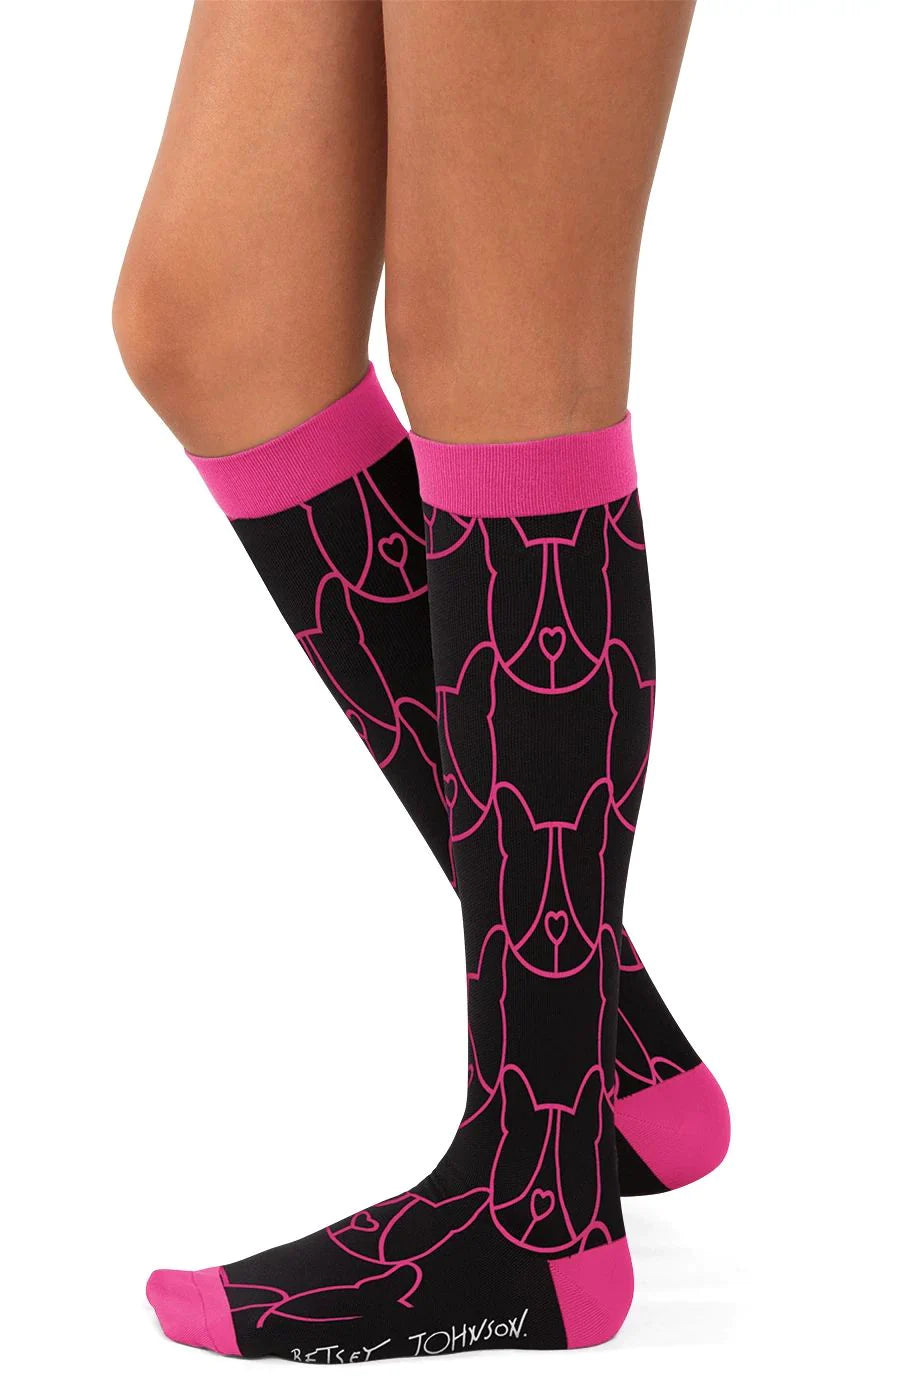 Koi Betsey Johnson Women's Compression Socks 2-Pack Women's Compression Socks Koi   